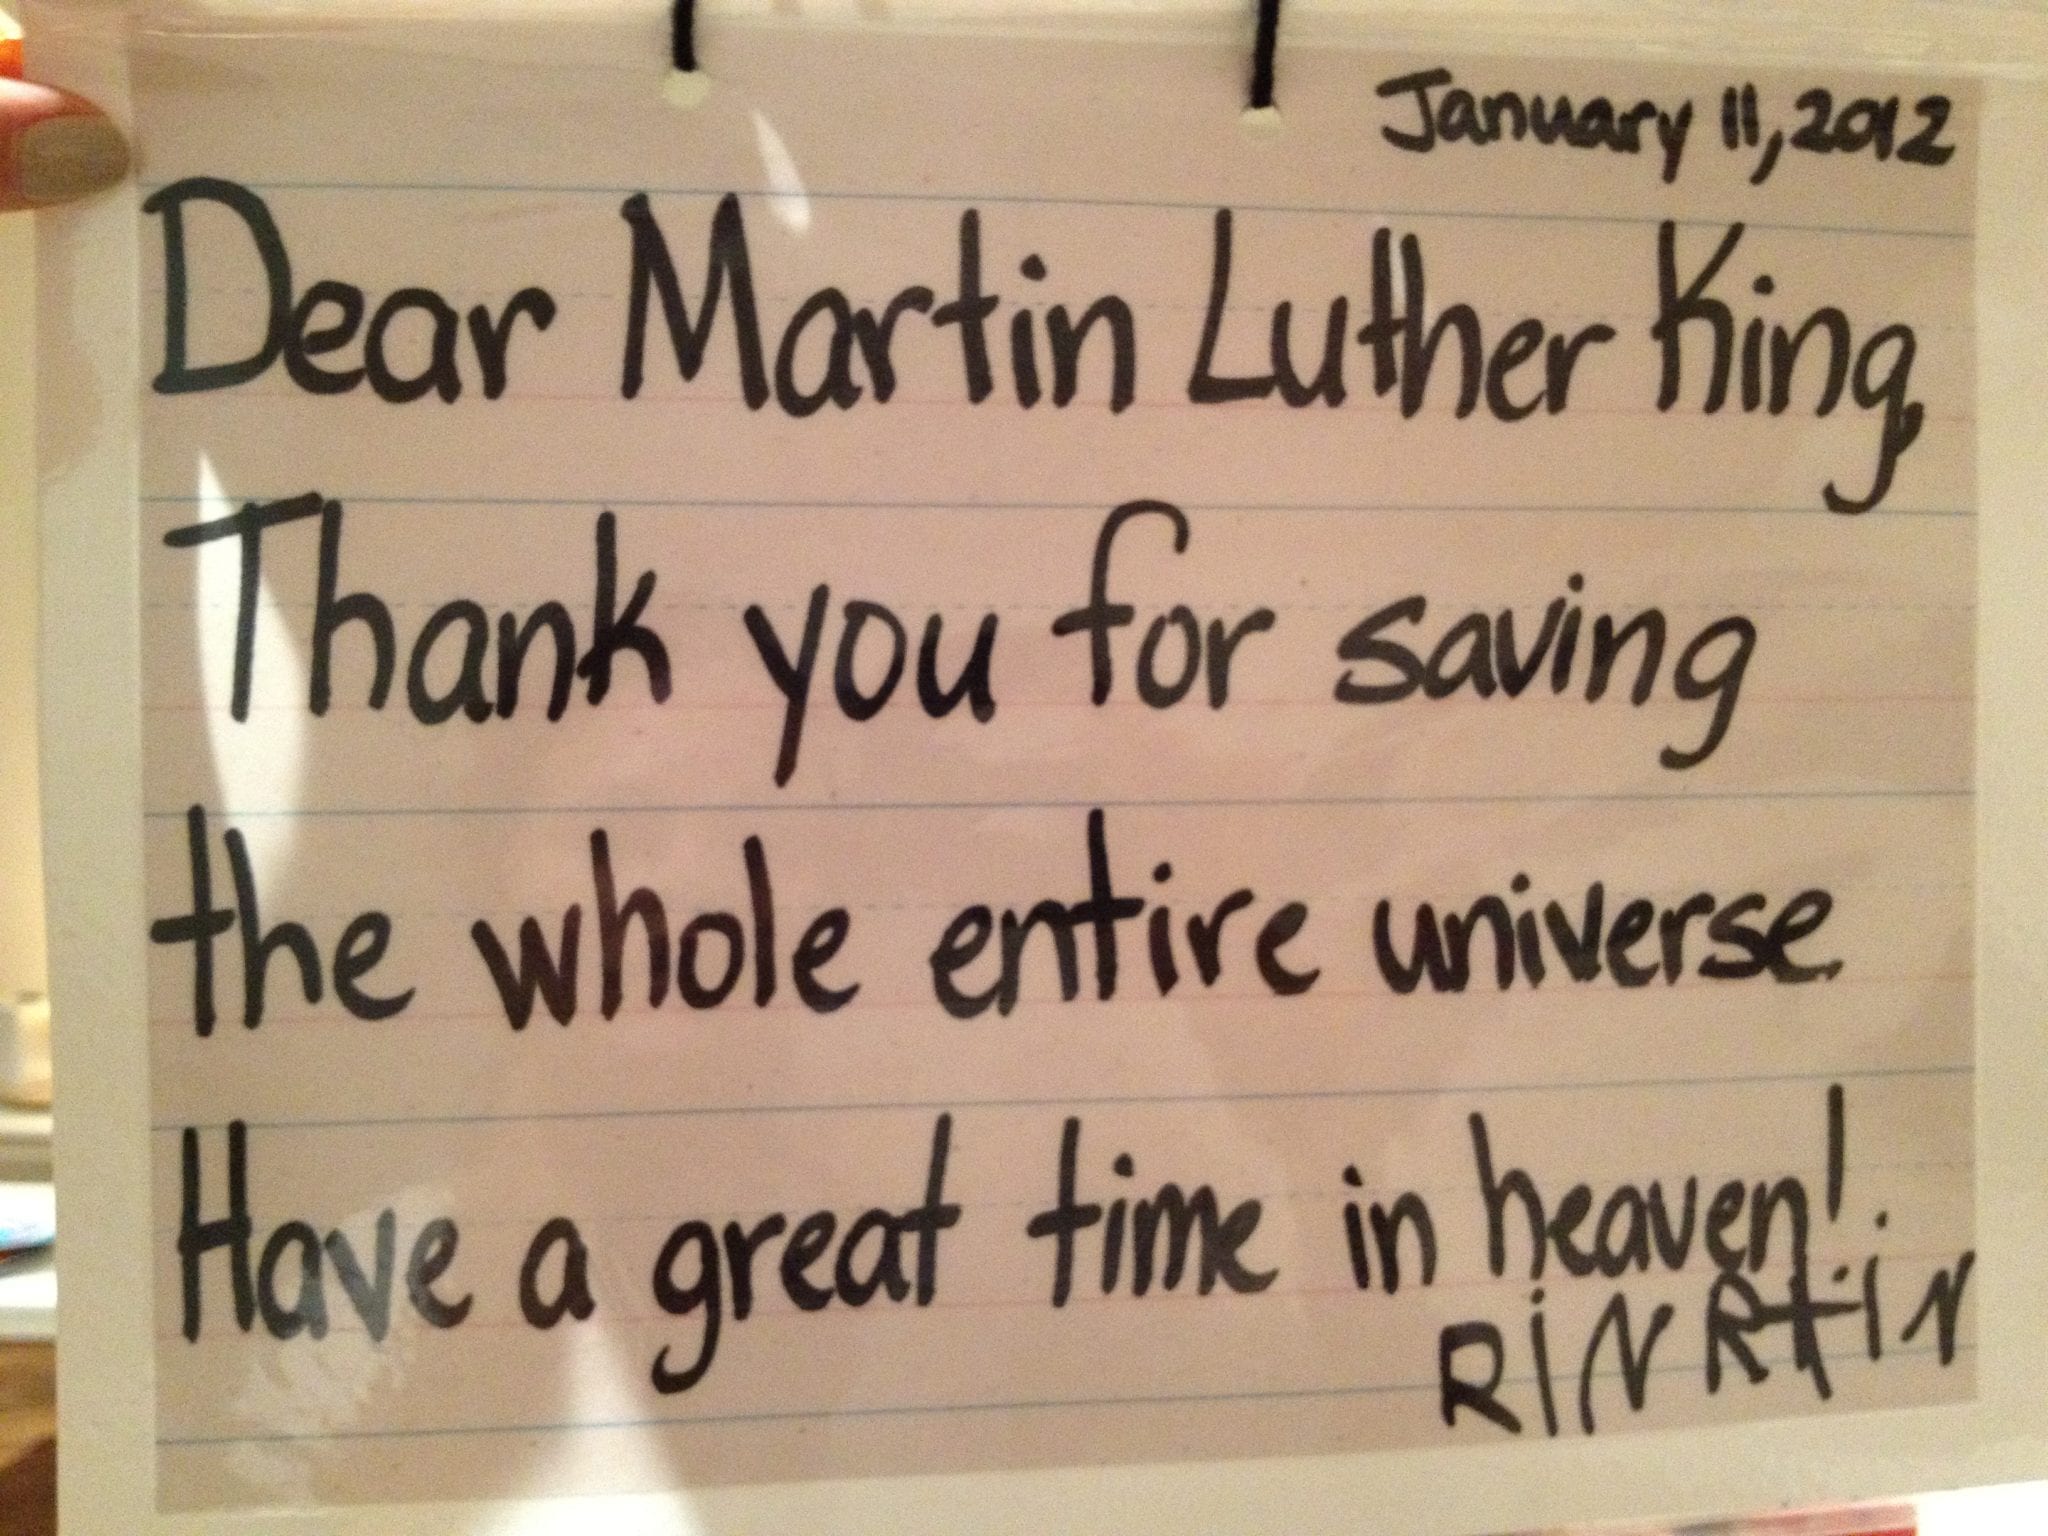 Dear Martin Luther King, Jr.